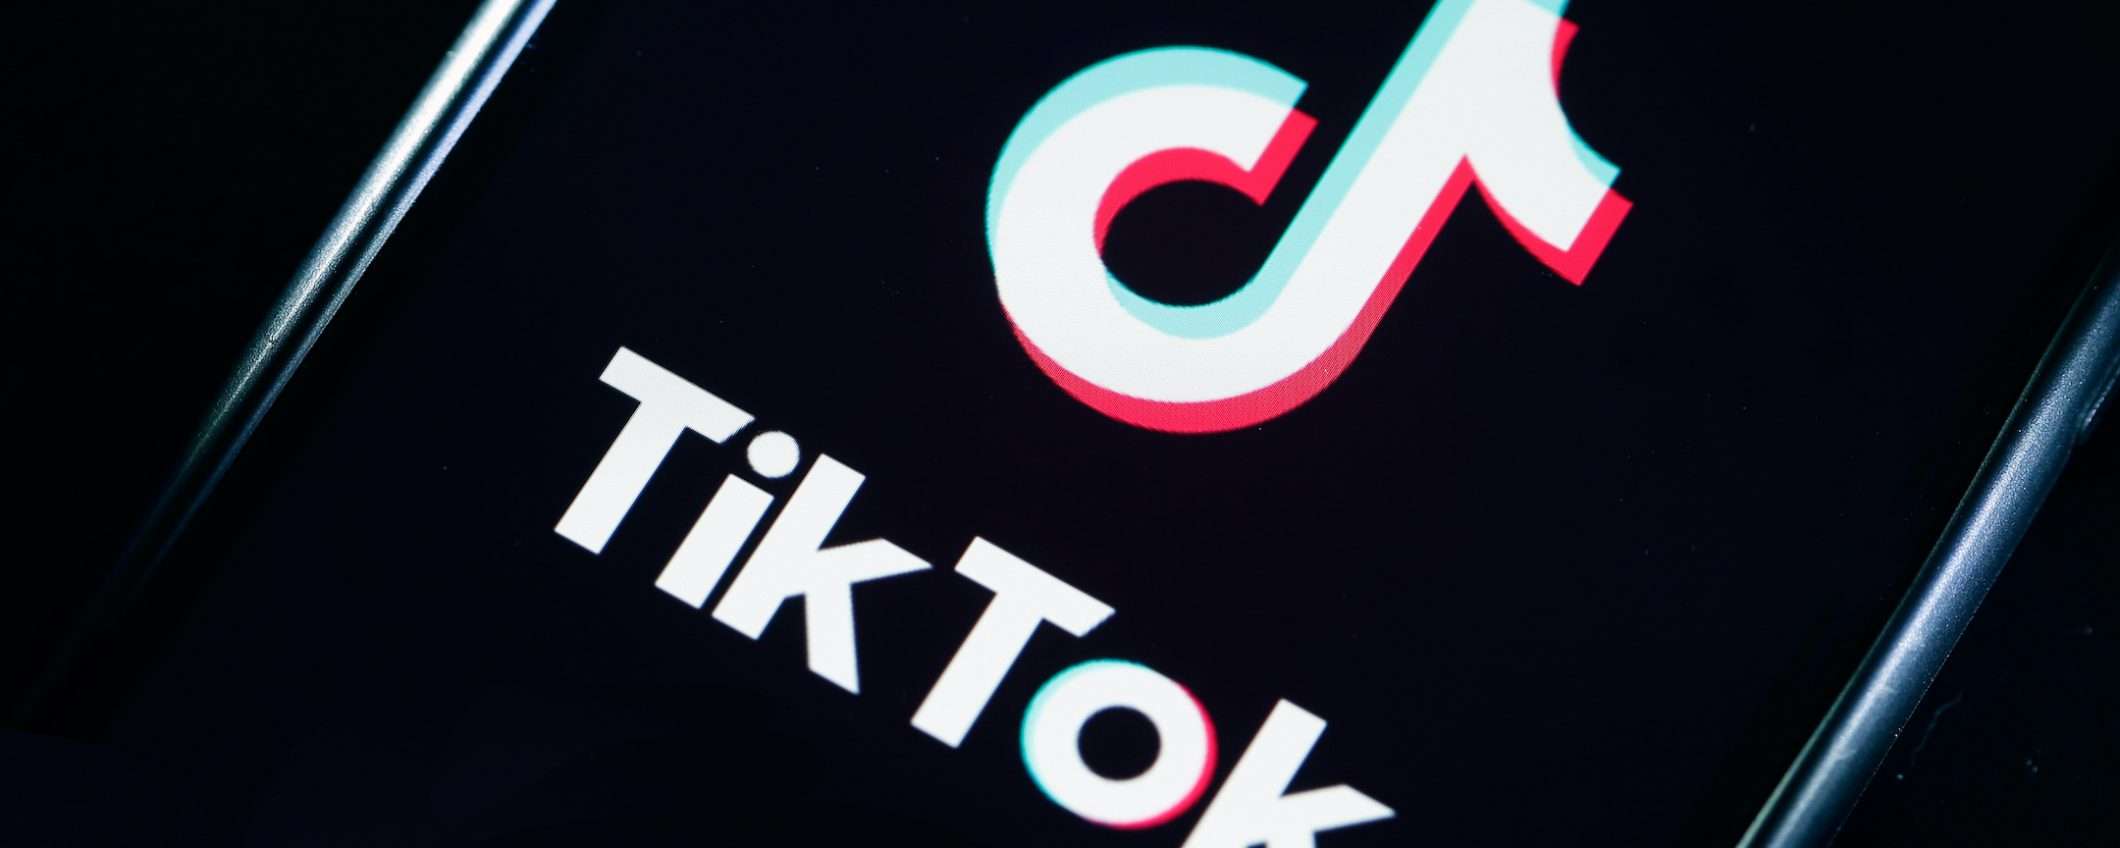 TikTok vietato in Belgio come negli USA, 